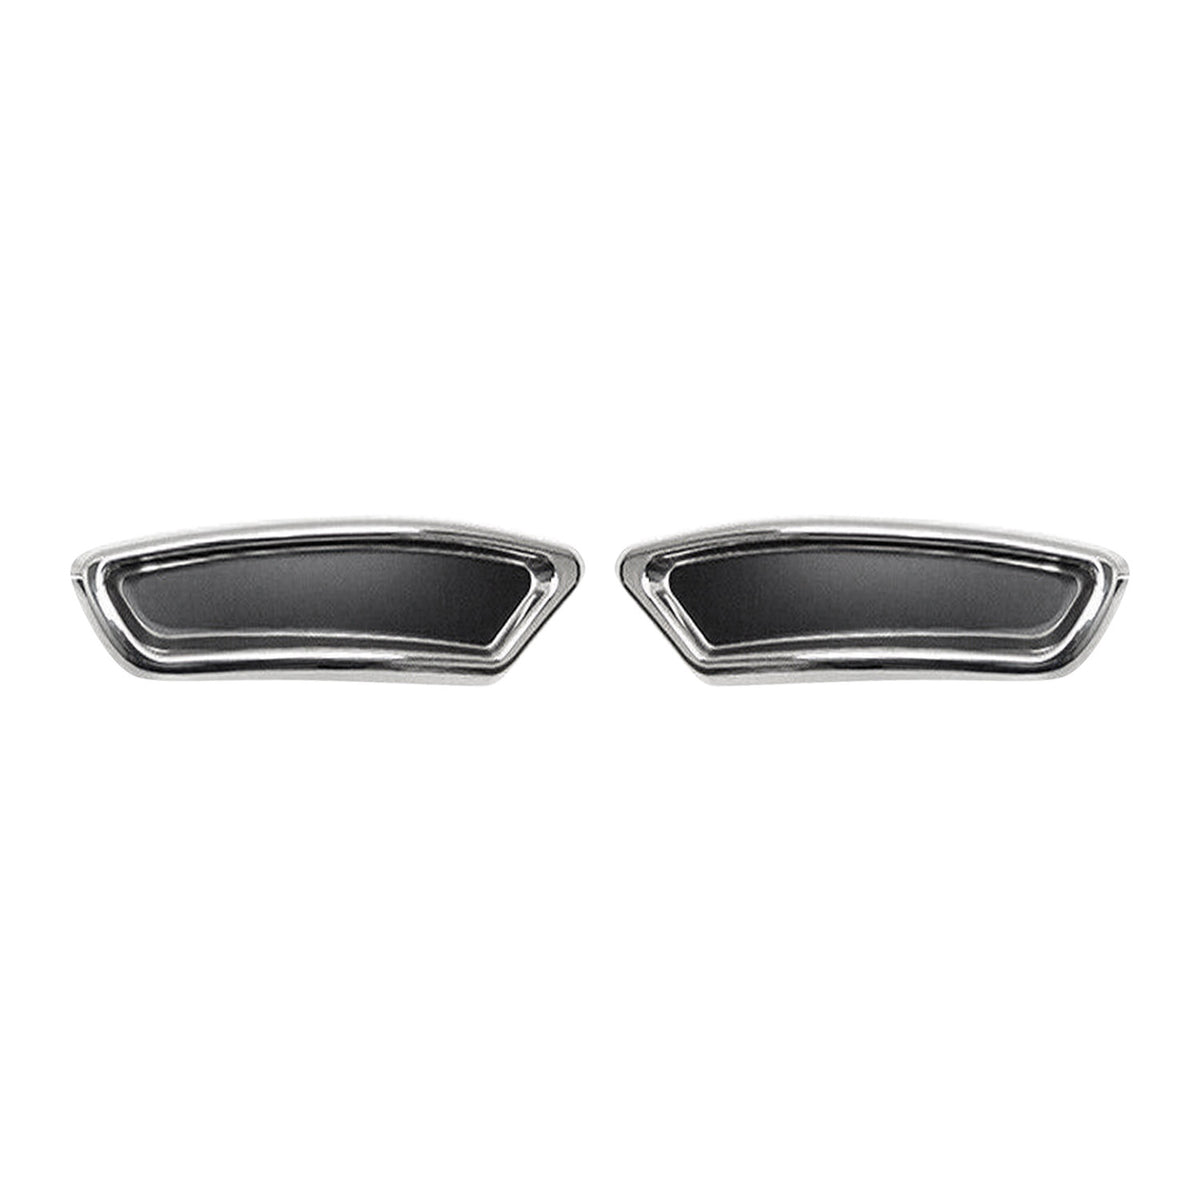 Bumper diffuser exhaust frame for VW Passat B8 Variant 2014-2019 stainless steel